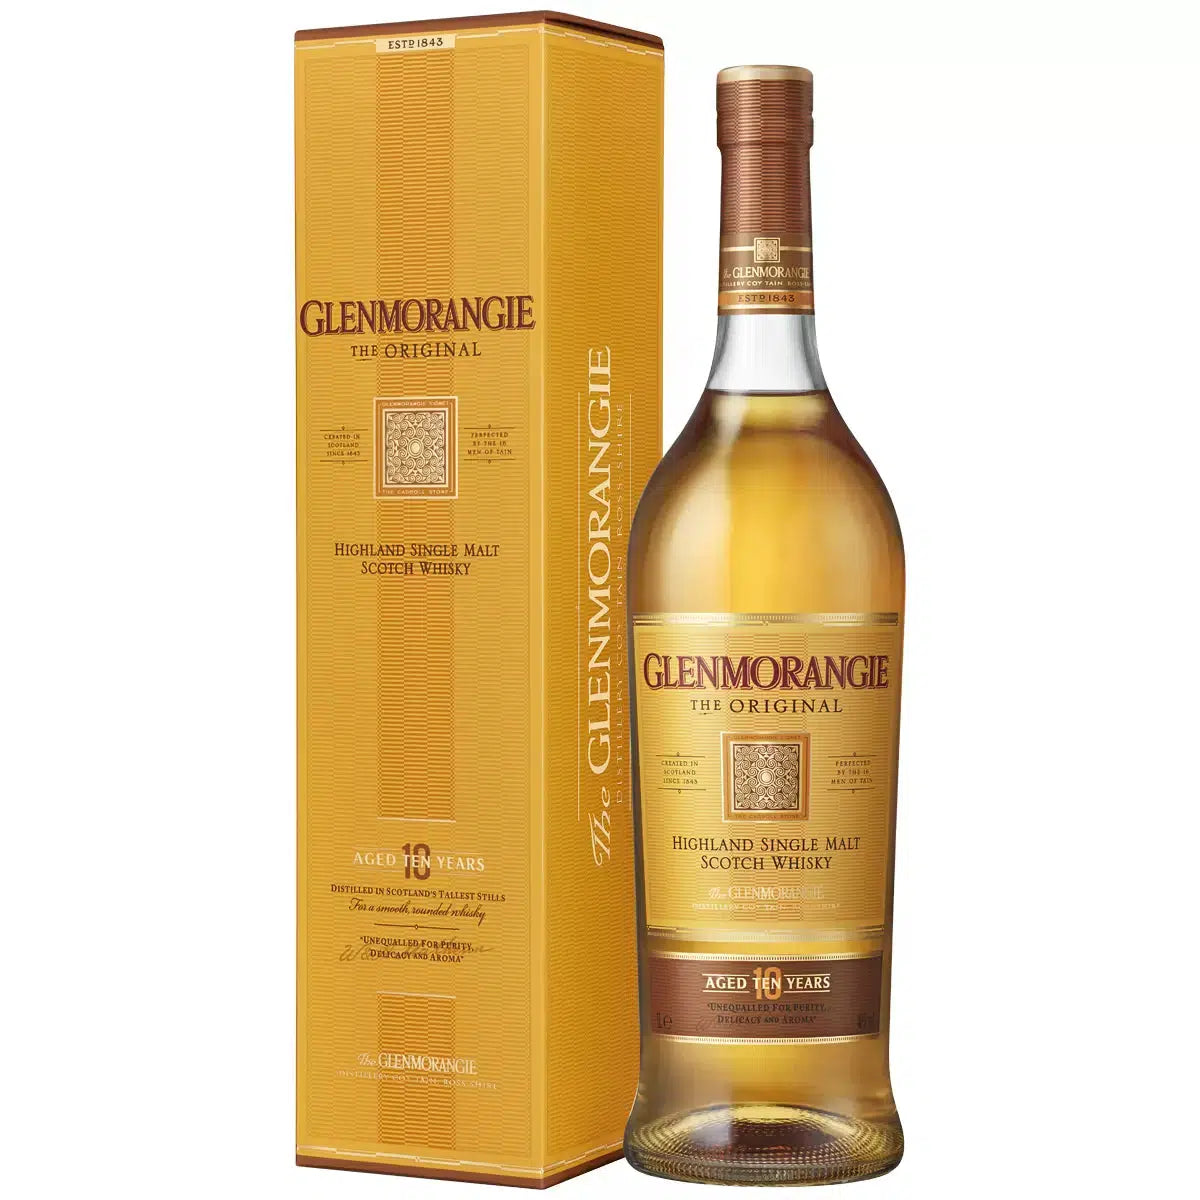 Glenmorangie (Older Packaging) The Original 10 Year Old Single Malt Scotch Whisky 1L